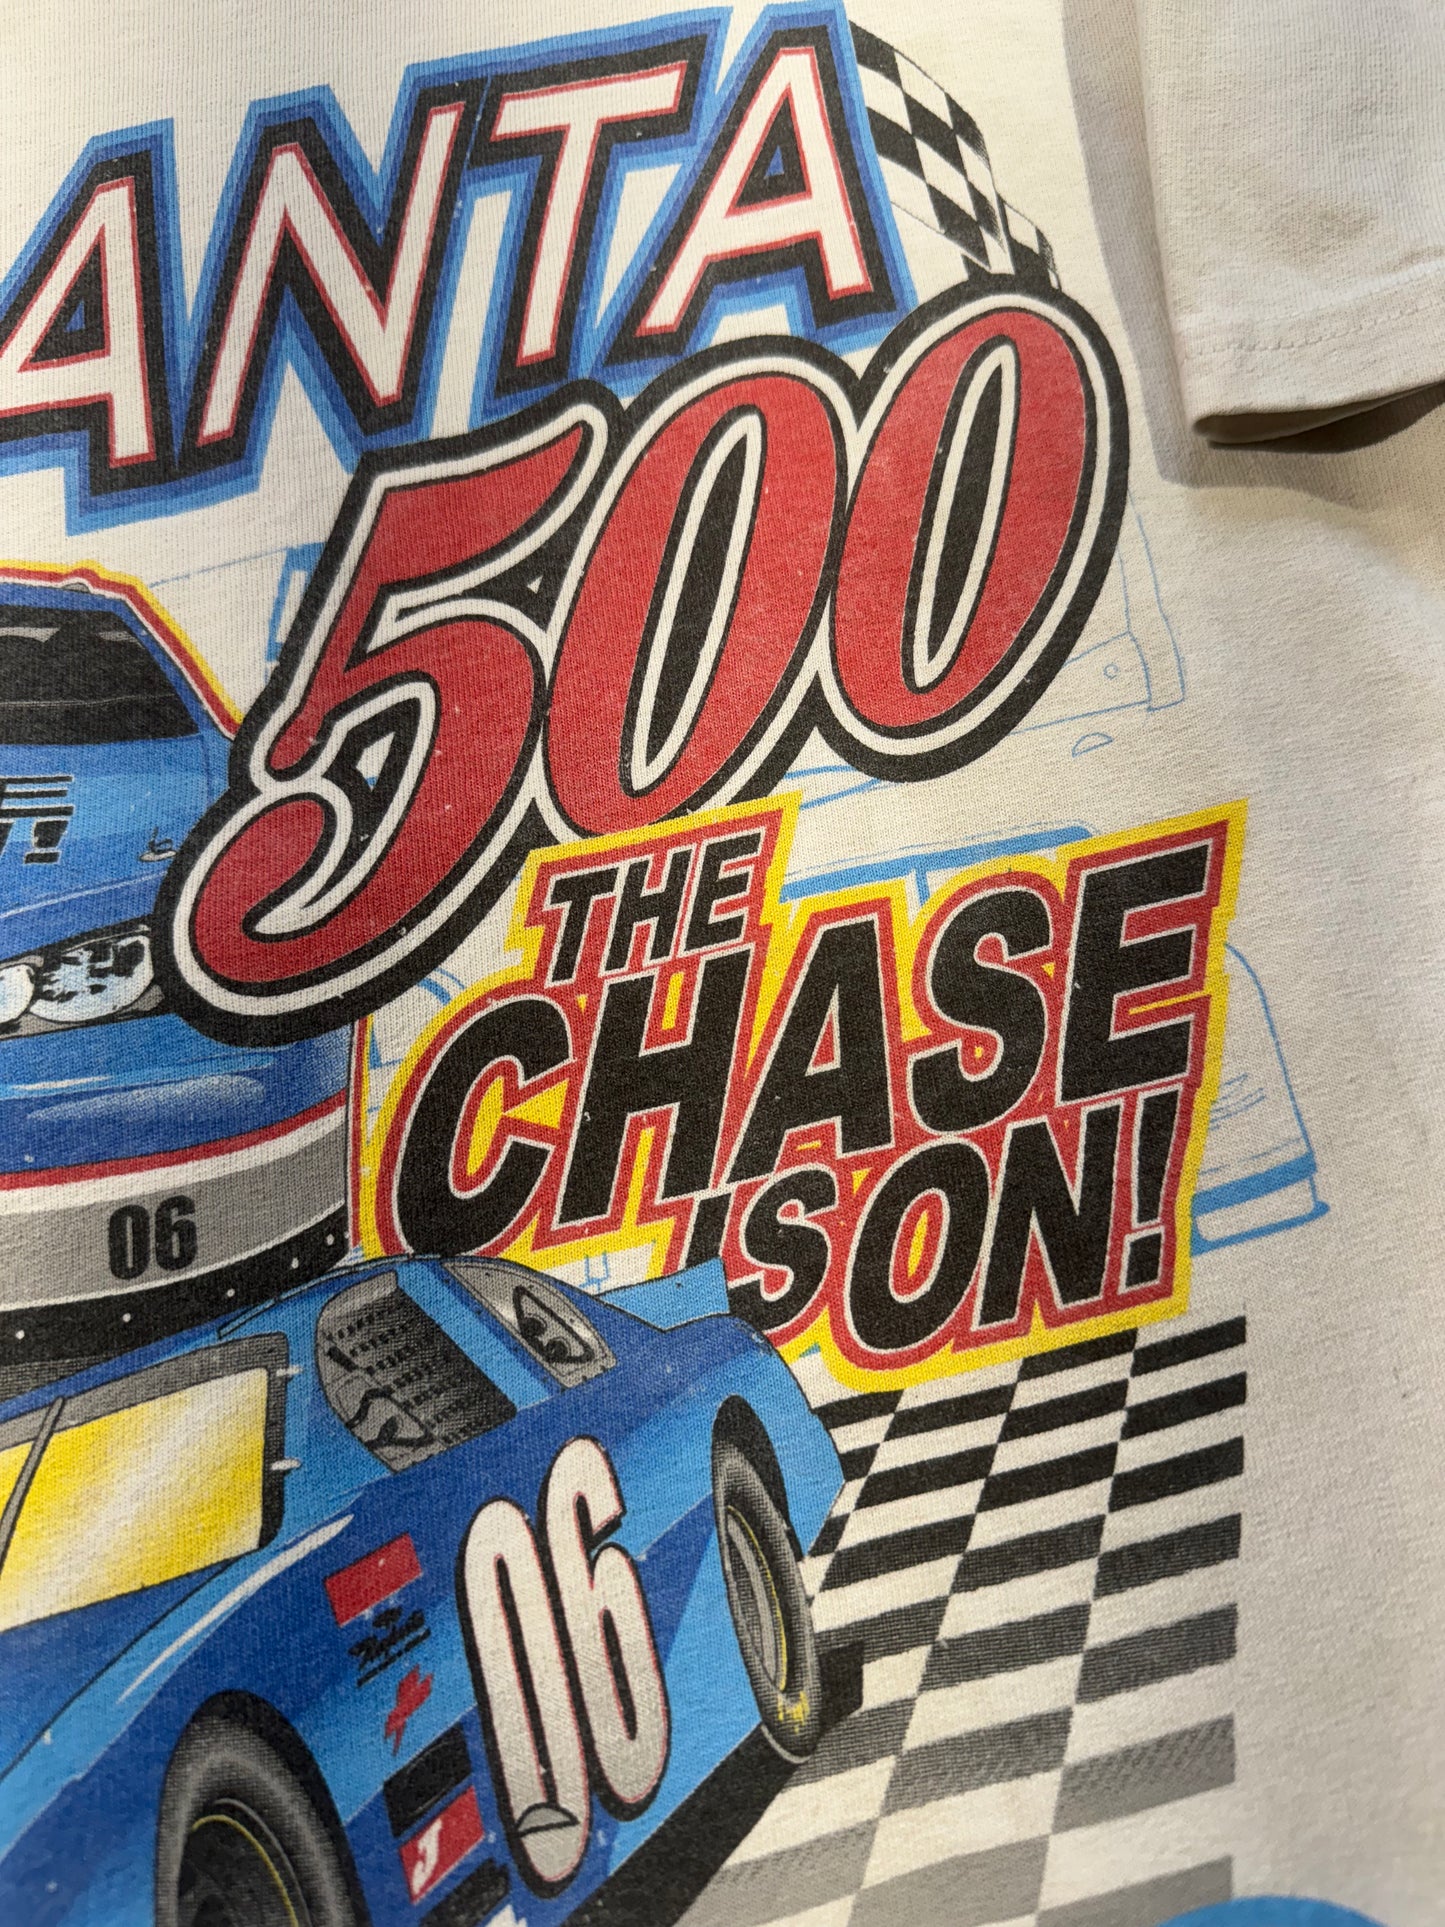 Vintage Nascar T-Shirt Atlanda 500